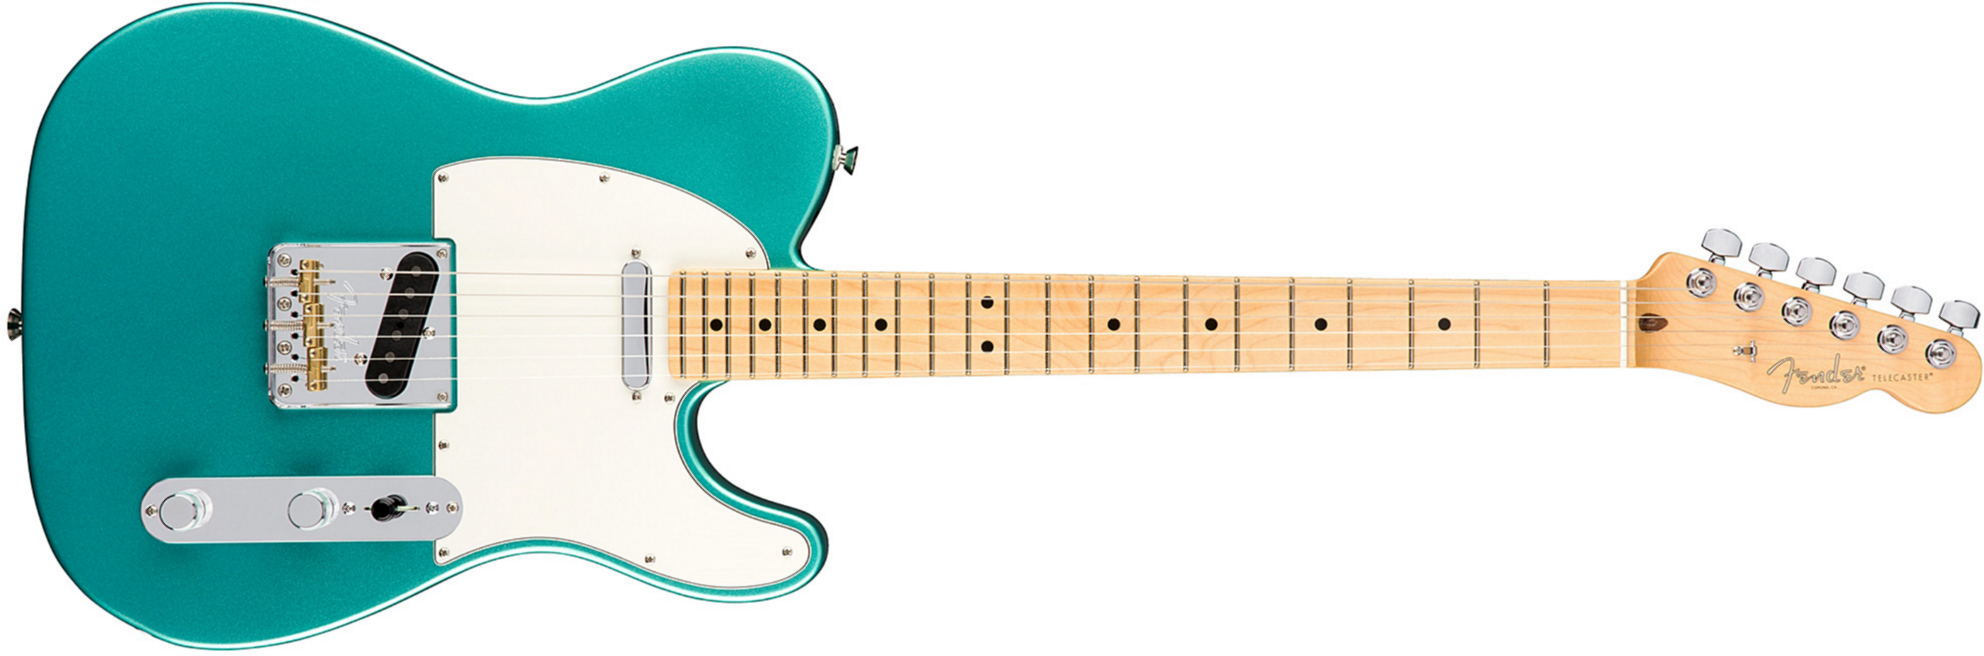 Fender Tele American Professional 2s Usa Mn - Mystic Seafoam - Guitarra eléctrica con forma de tel - Main picture